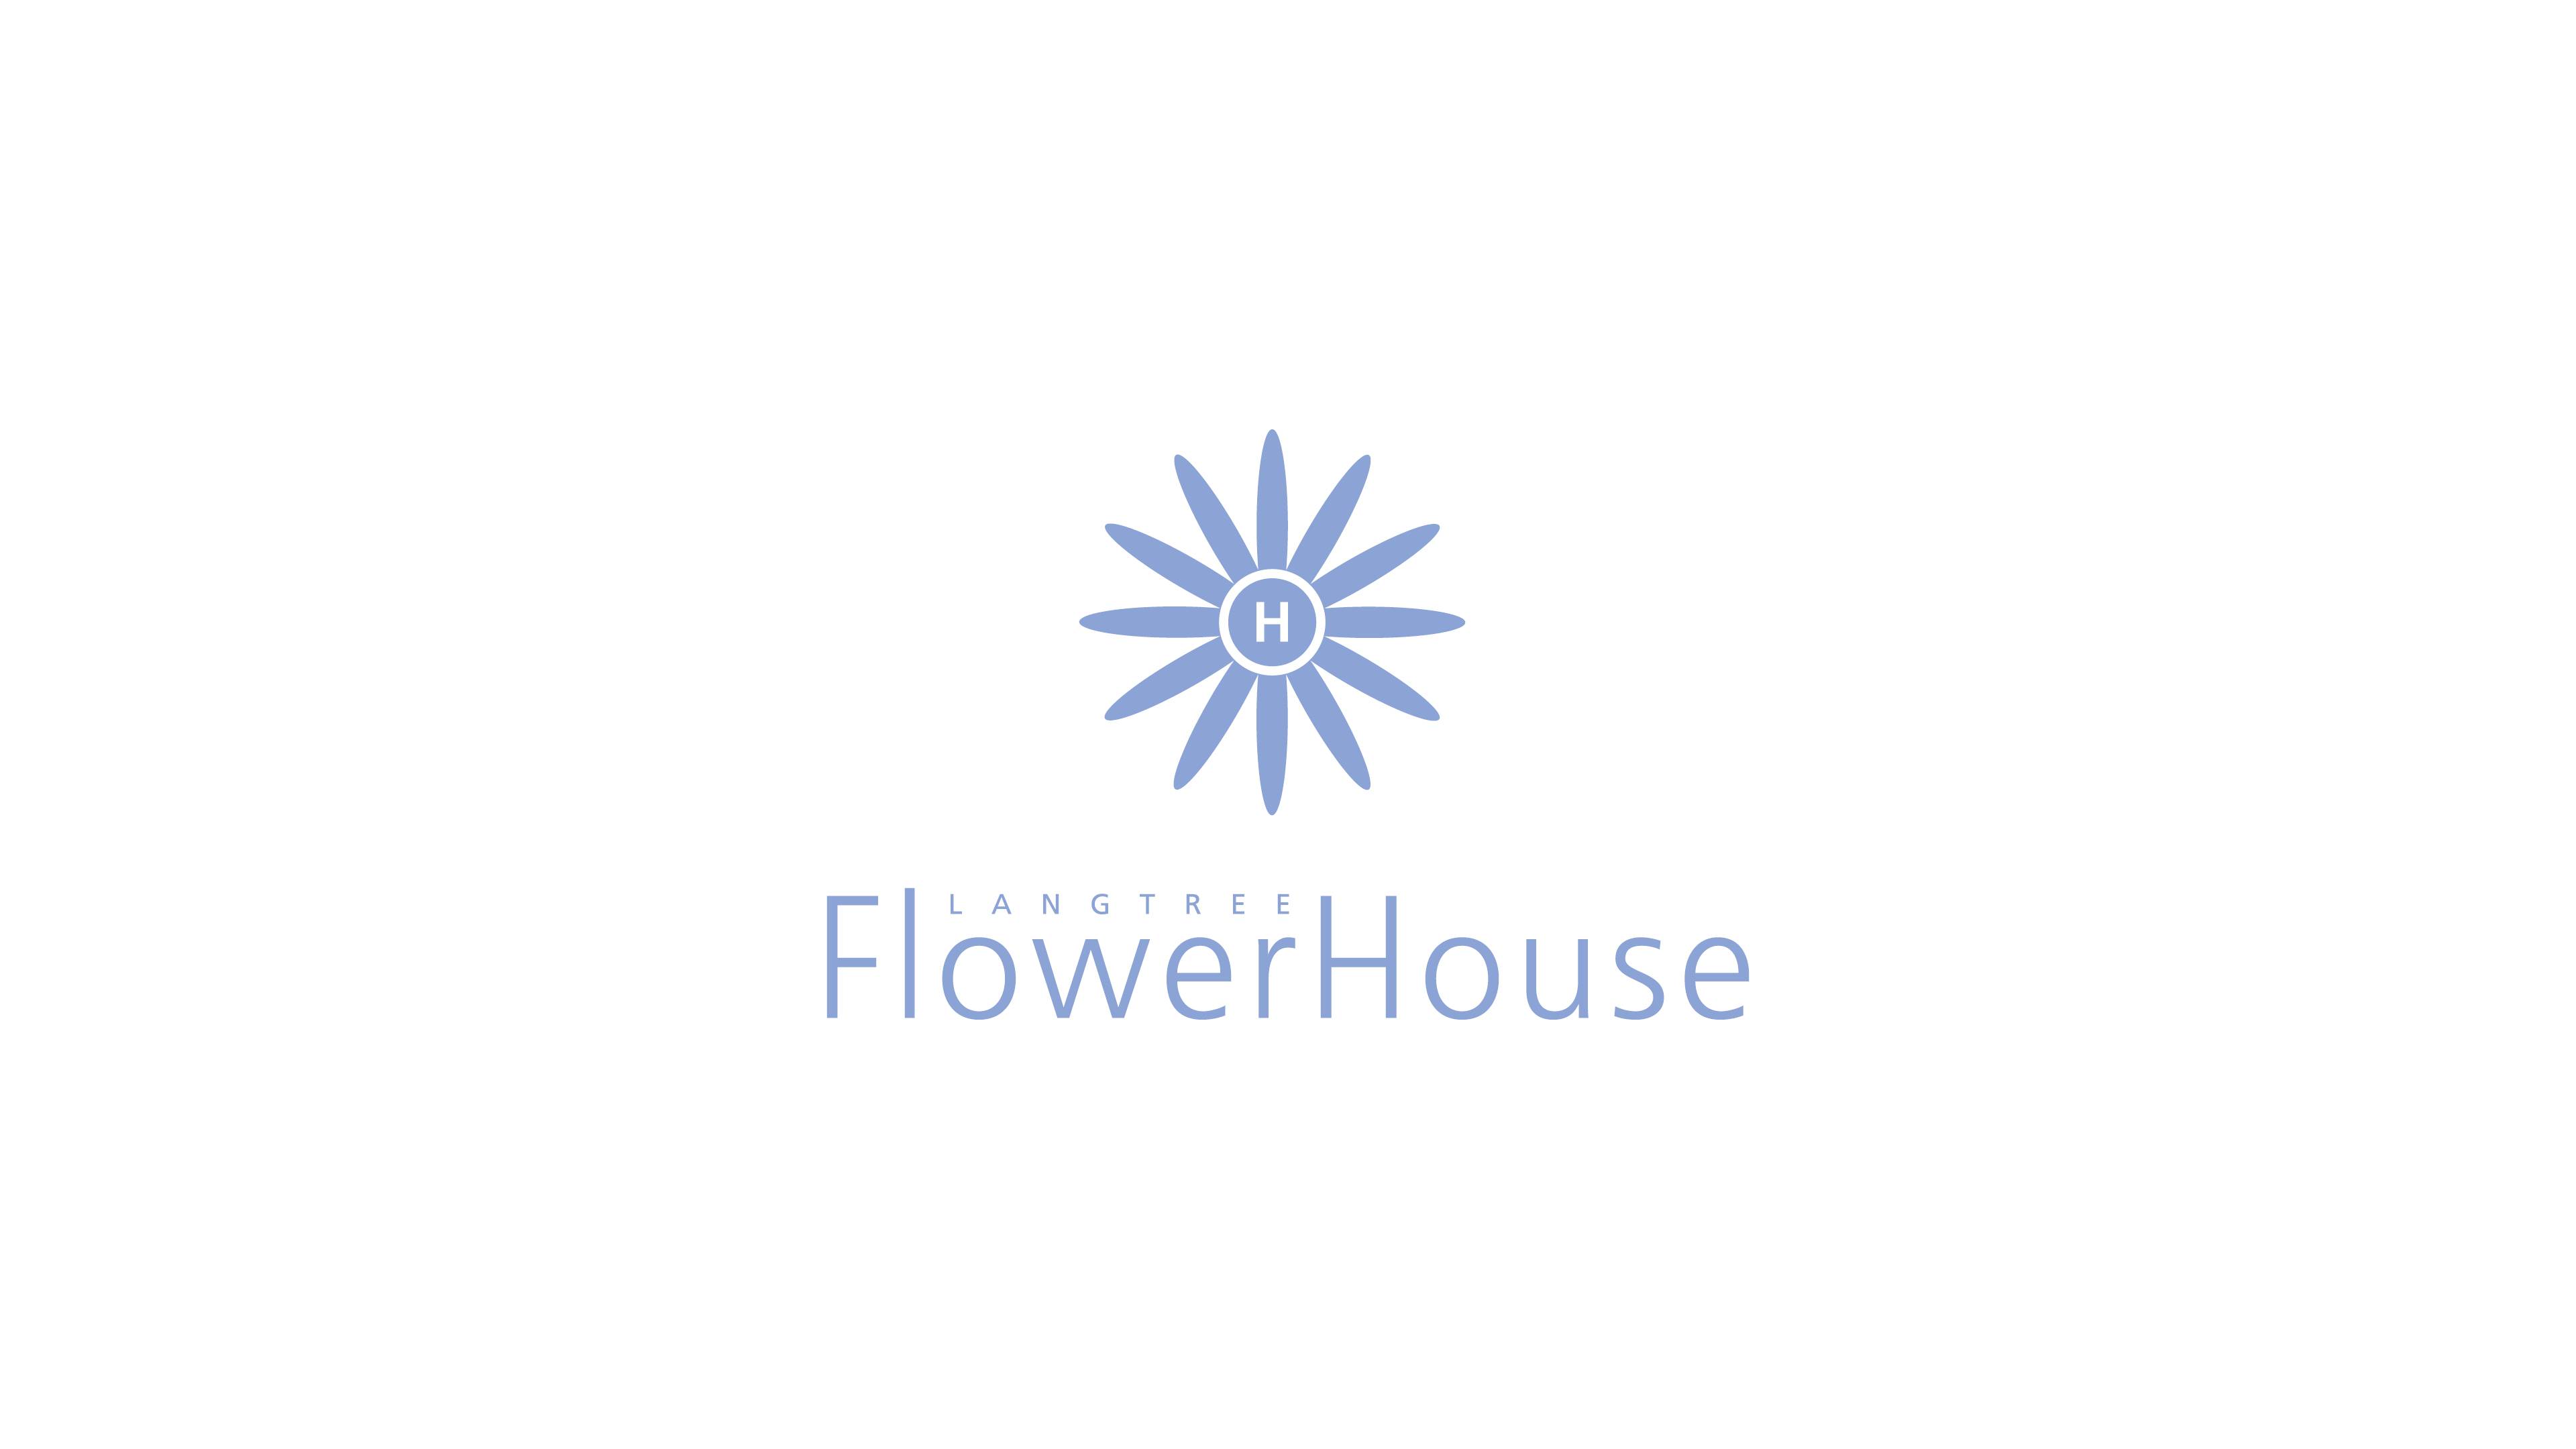 Langtree Flowerhouse Logo and Branding Design - Saunders Design Group